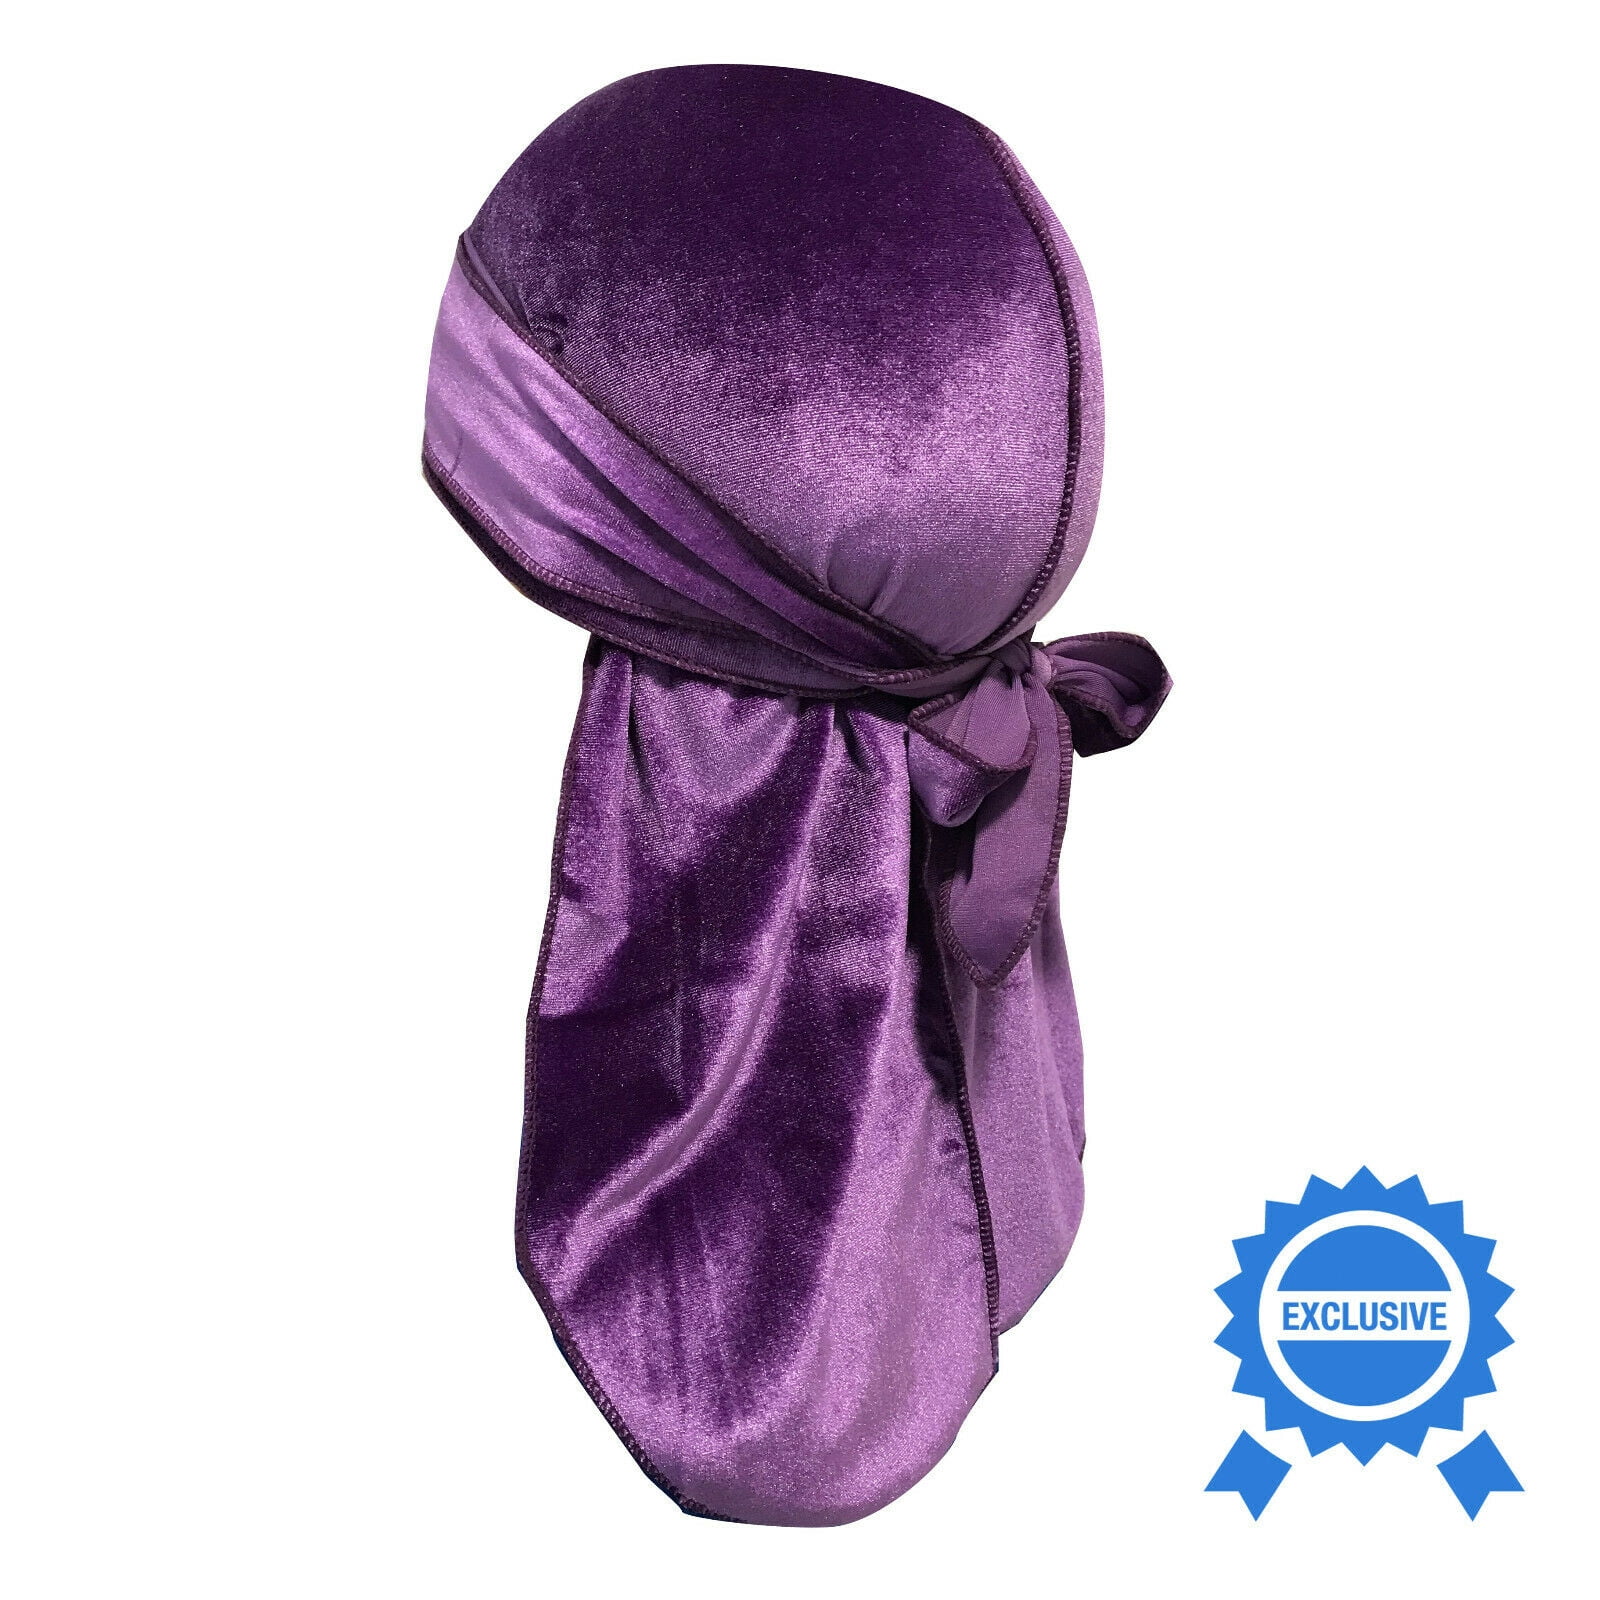 VC Velvet Durag Premium Men's Doo Rag Hats Silky Wave Cap Designer Style 23 Colors, Adult Unisex, Size: One size, Pink